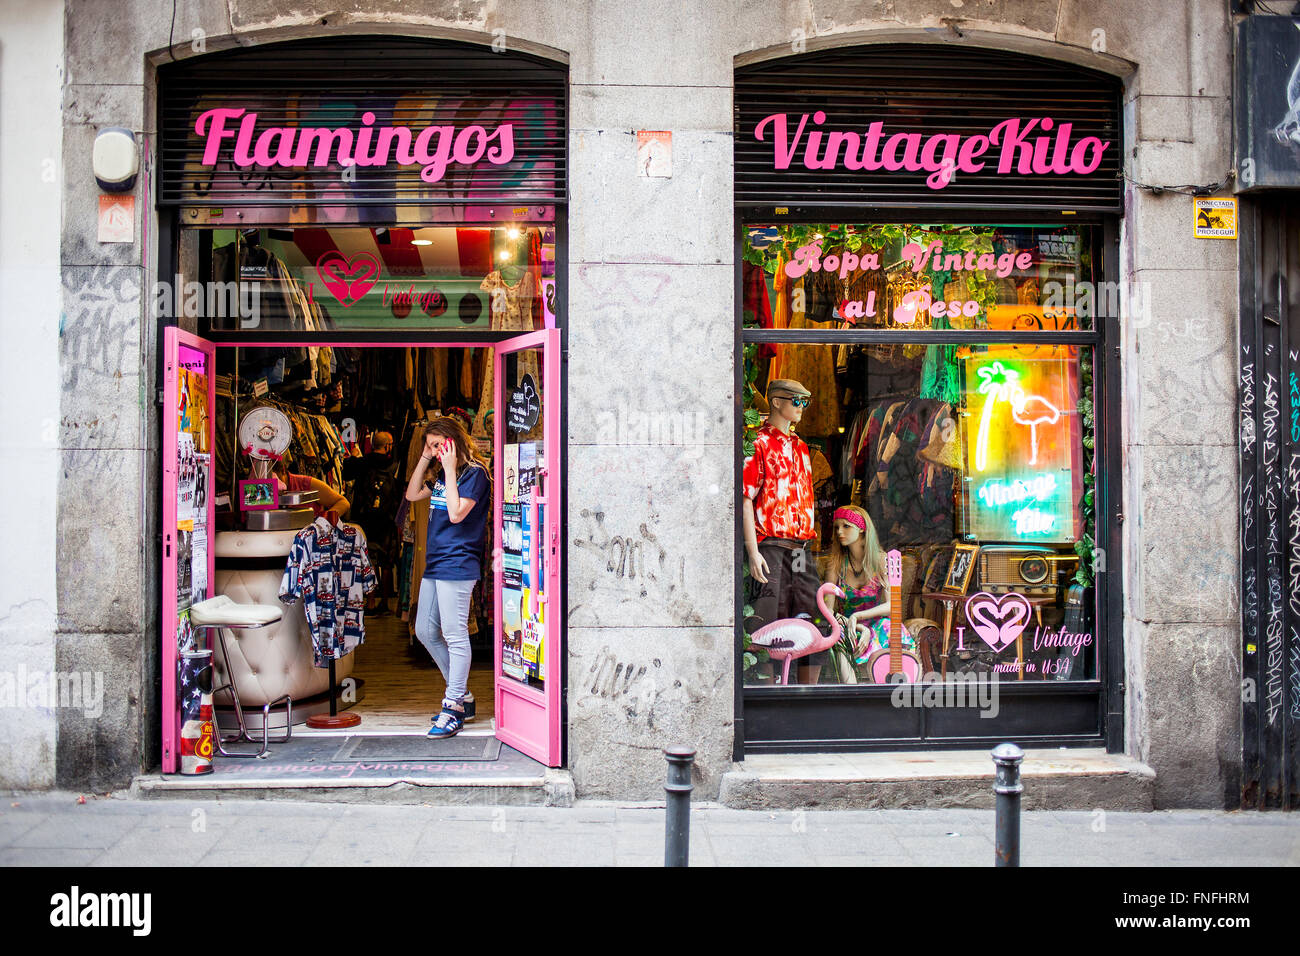 Flamingos Vintage Kilo, Calle del Espiritu Santo 1, in Malasana quarter. Madrid, Spain Stock Photo